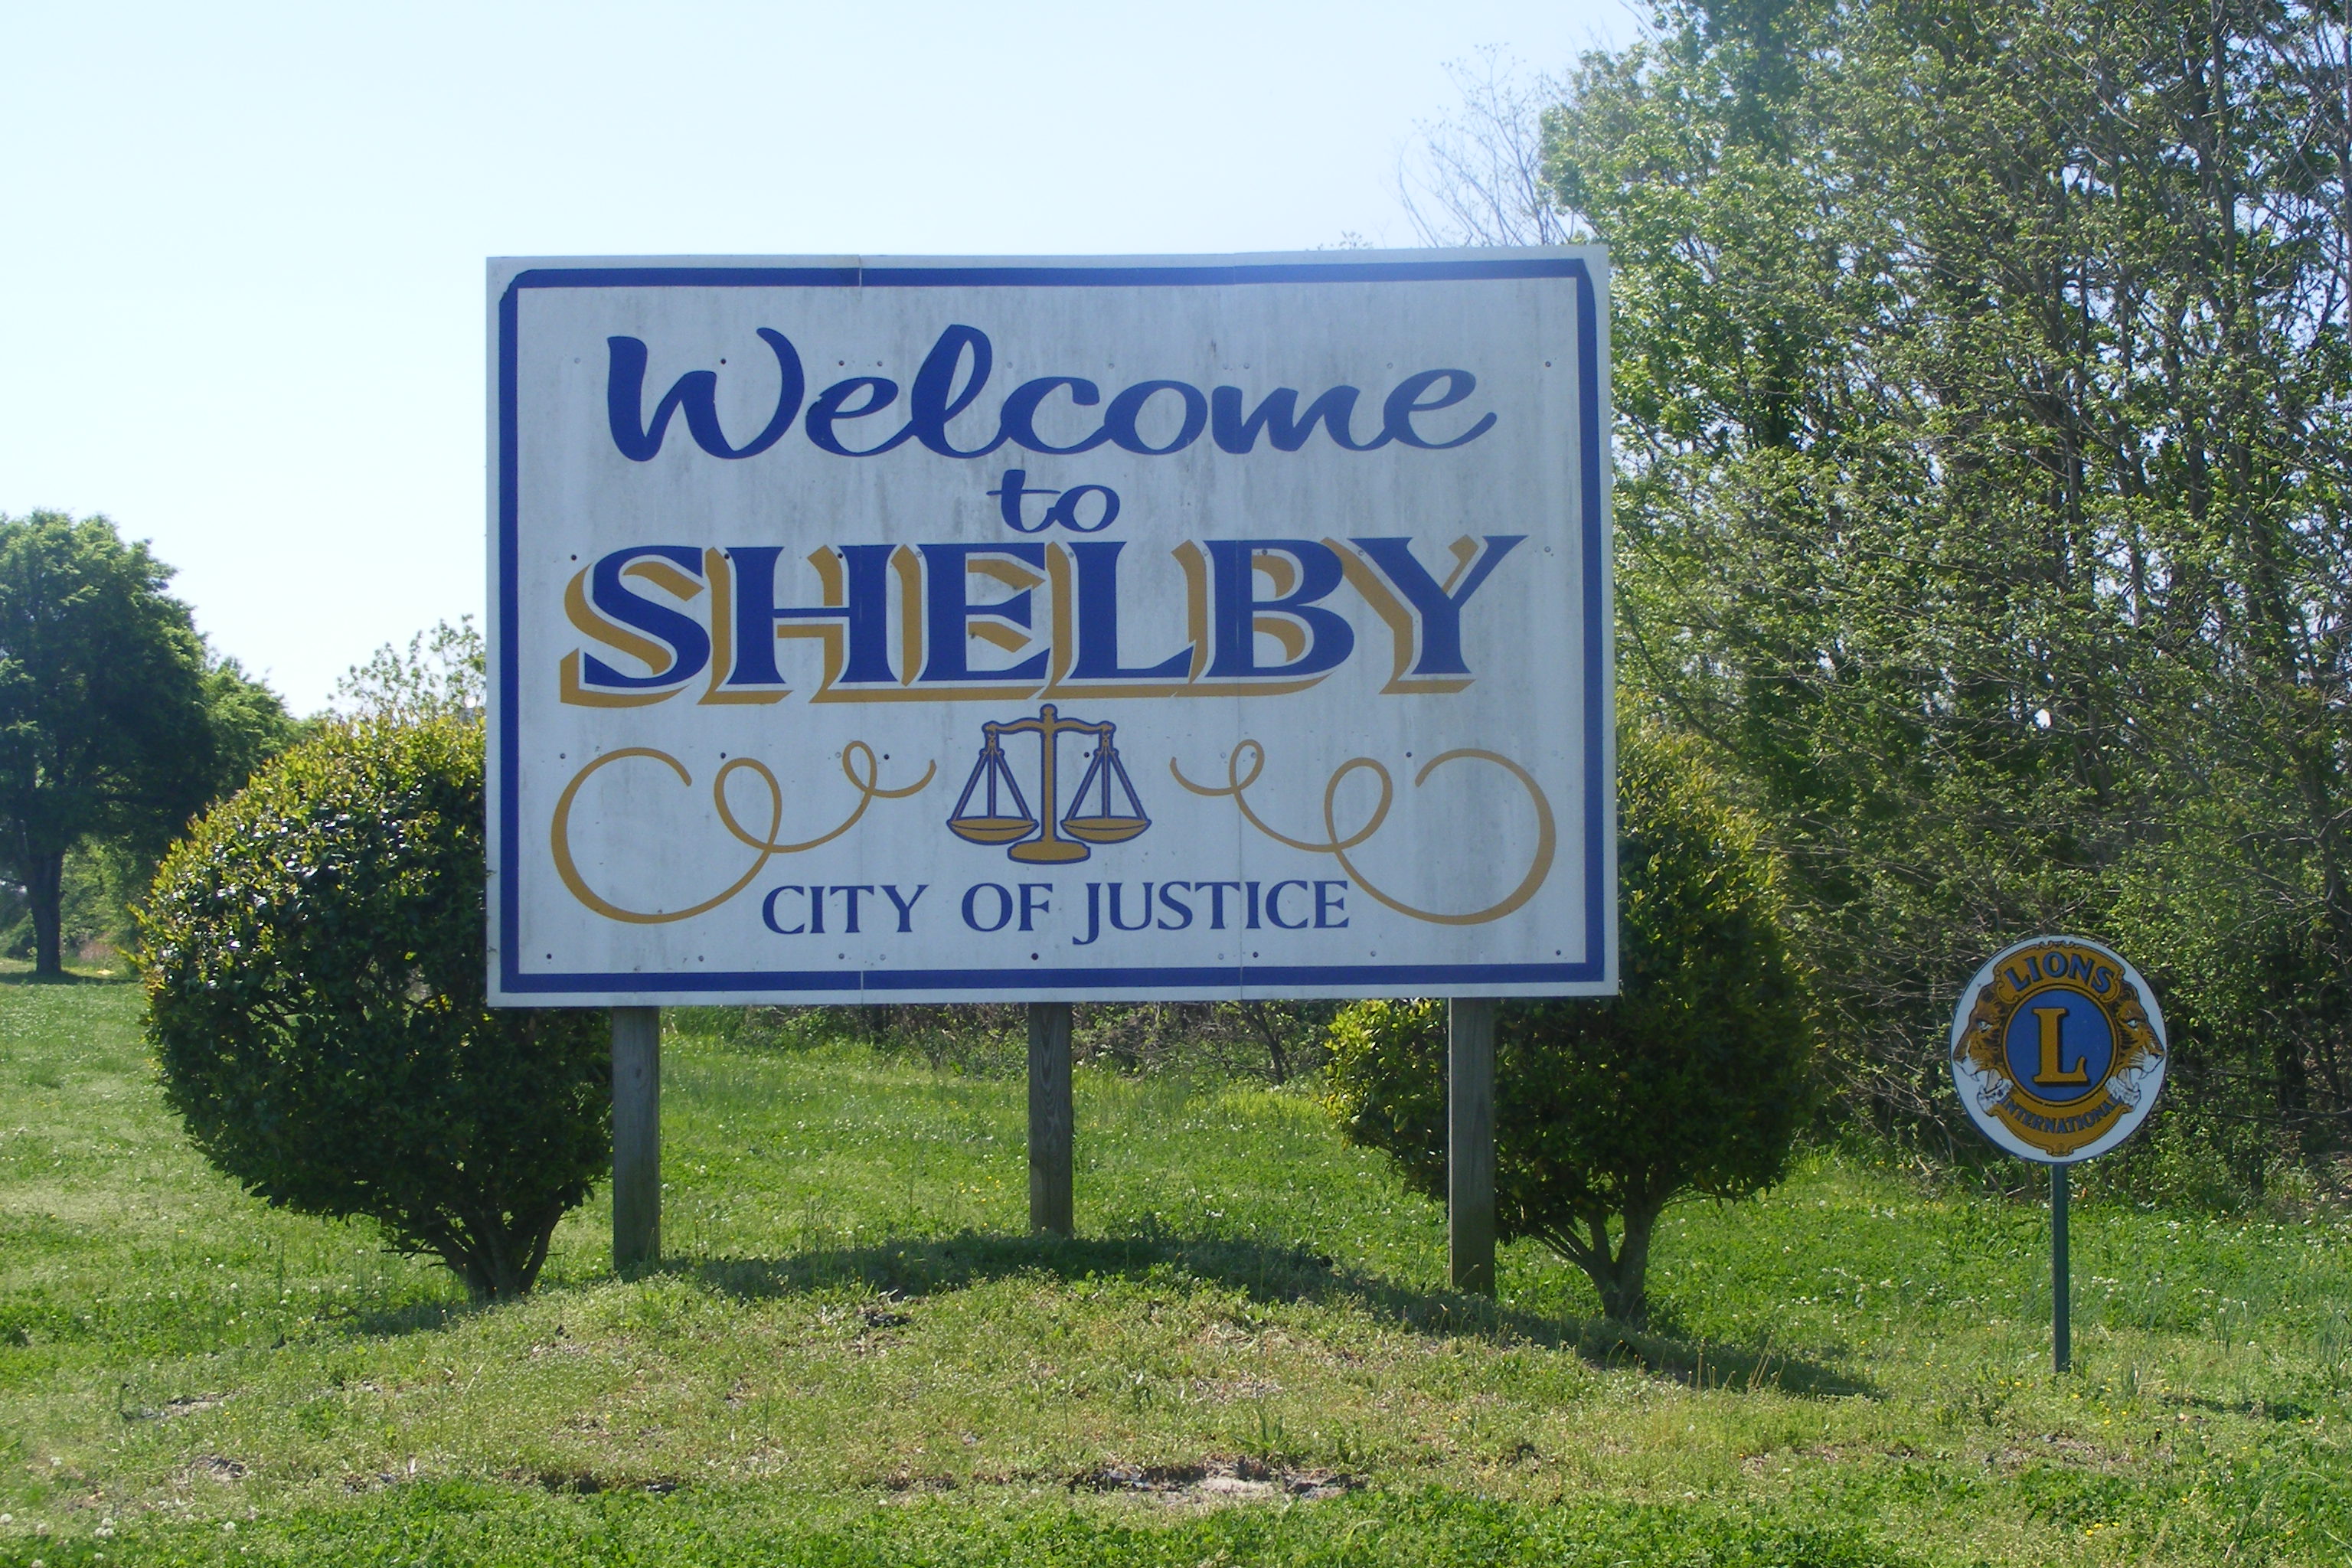 Shelby, Mississippi